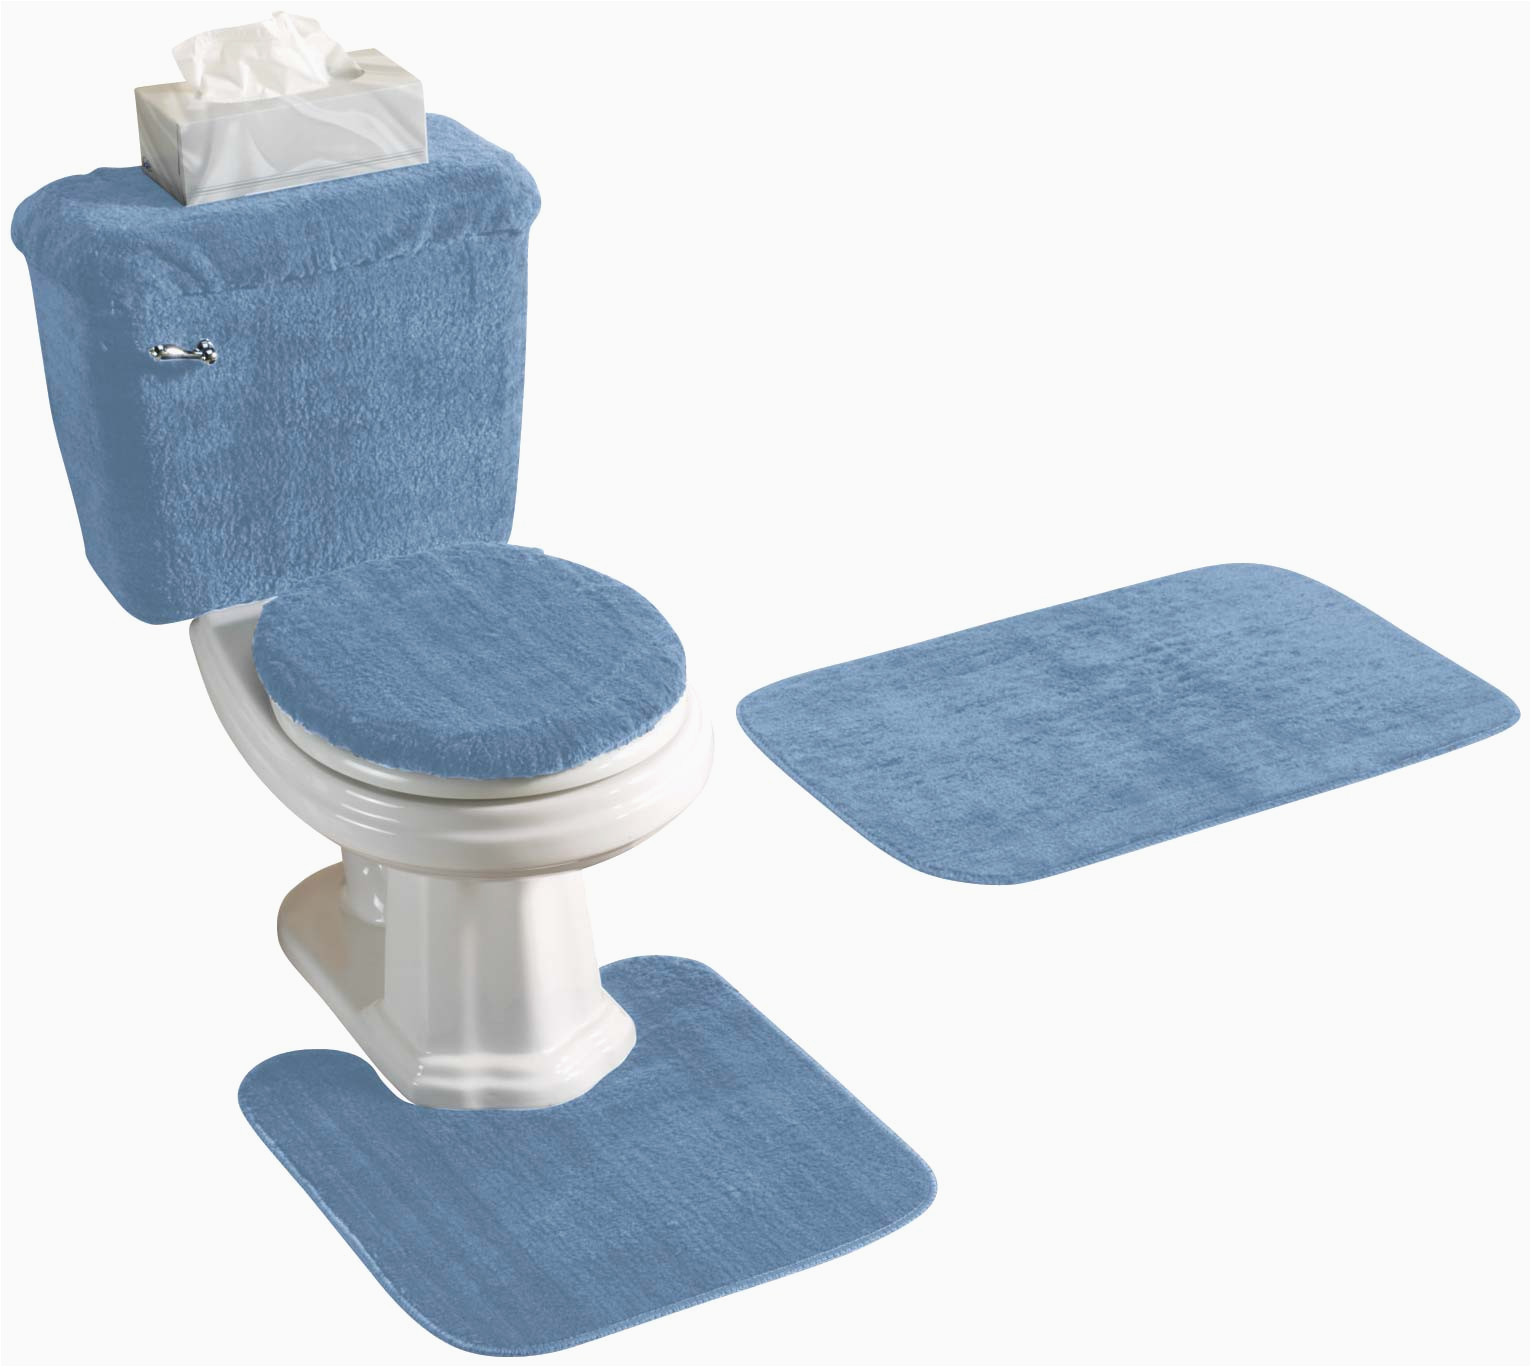 5 Piece Bath Rug Set Buy Bathroom Rug Set 5 Piece Nonslip with Contour Mat and toilet …